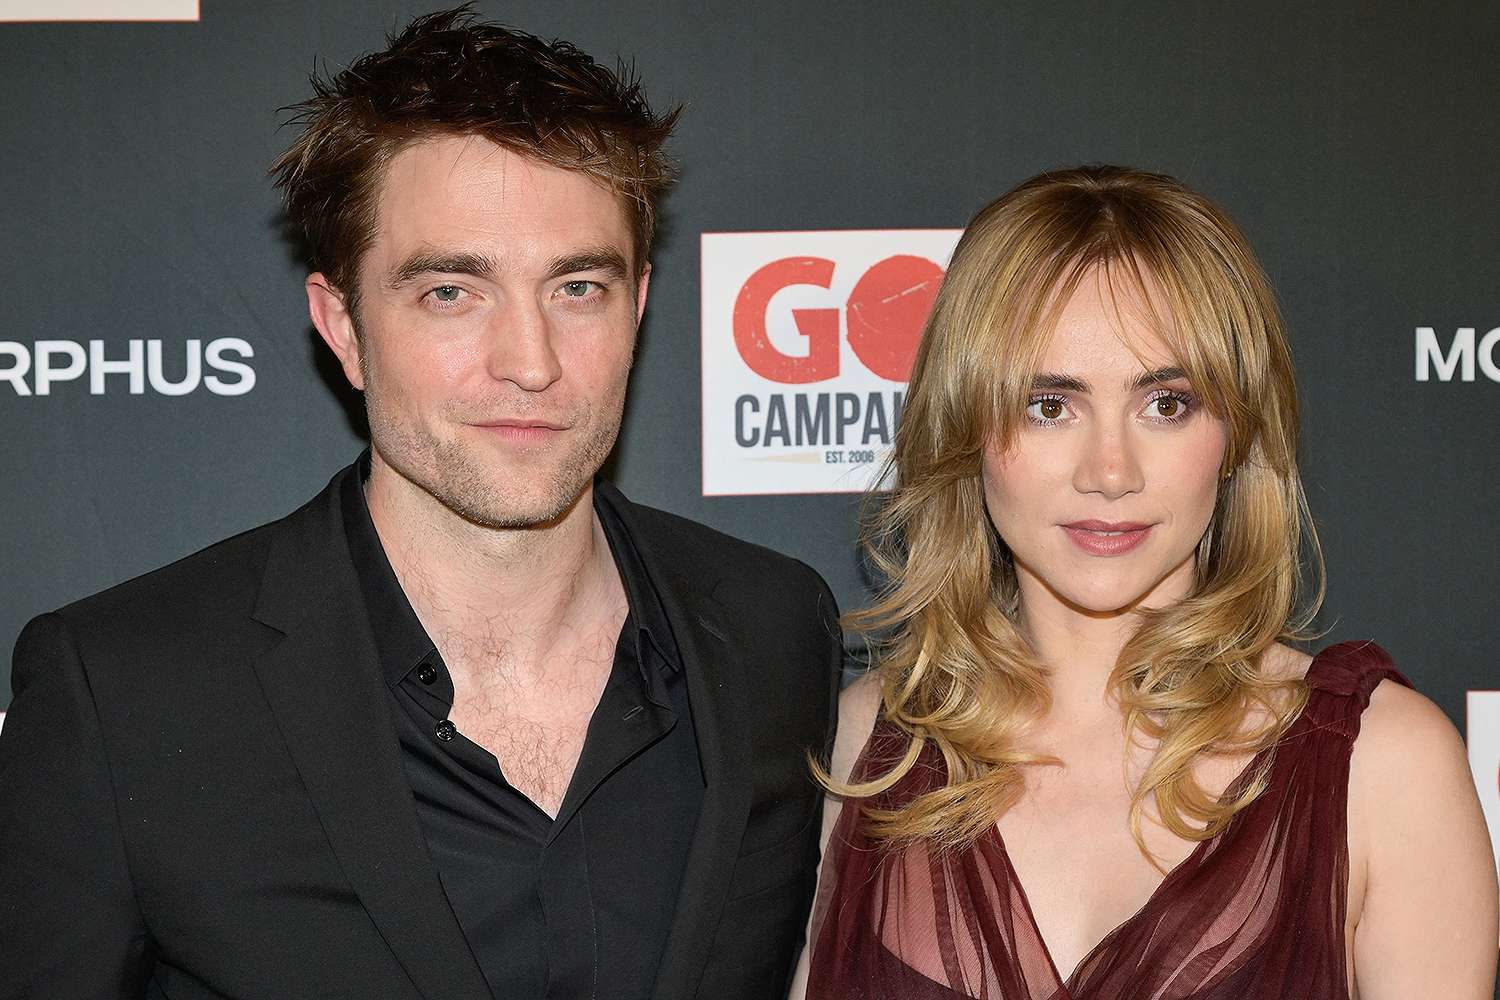 Is Suki Waterhouse Engaged To Robert Pattinson? She Flashes A Ring